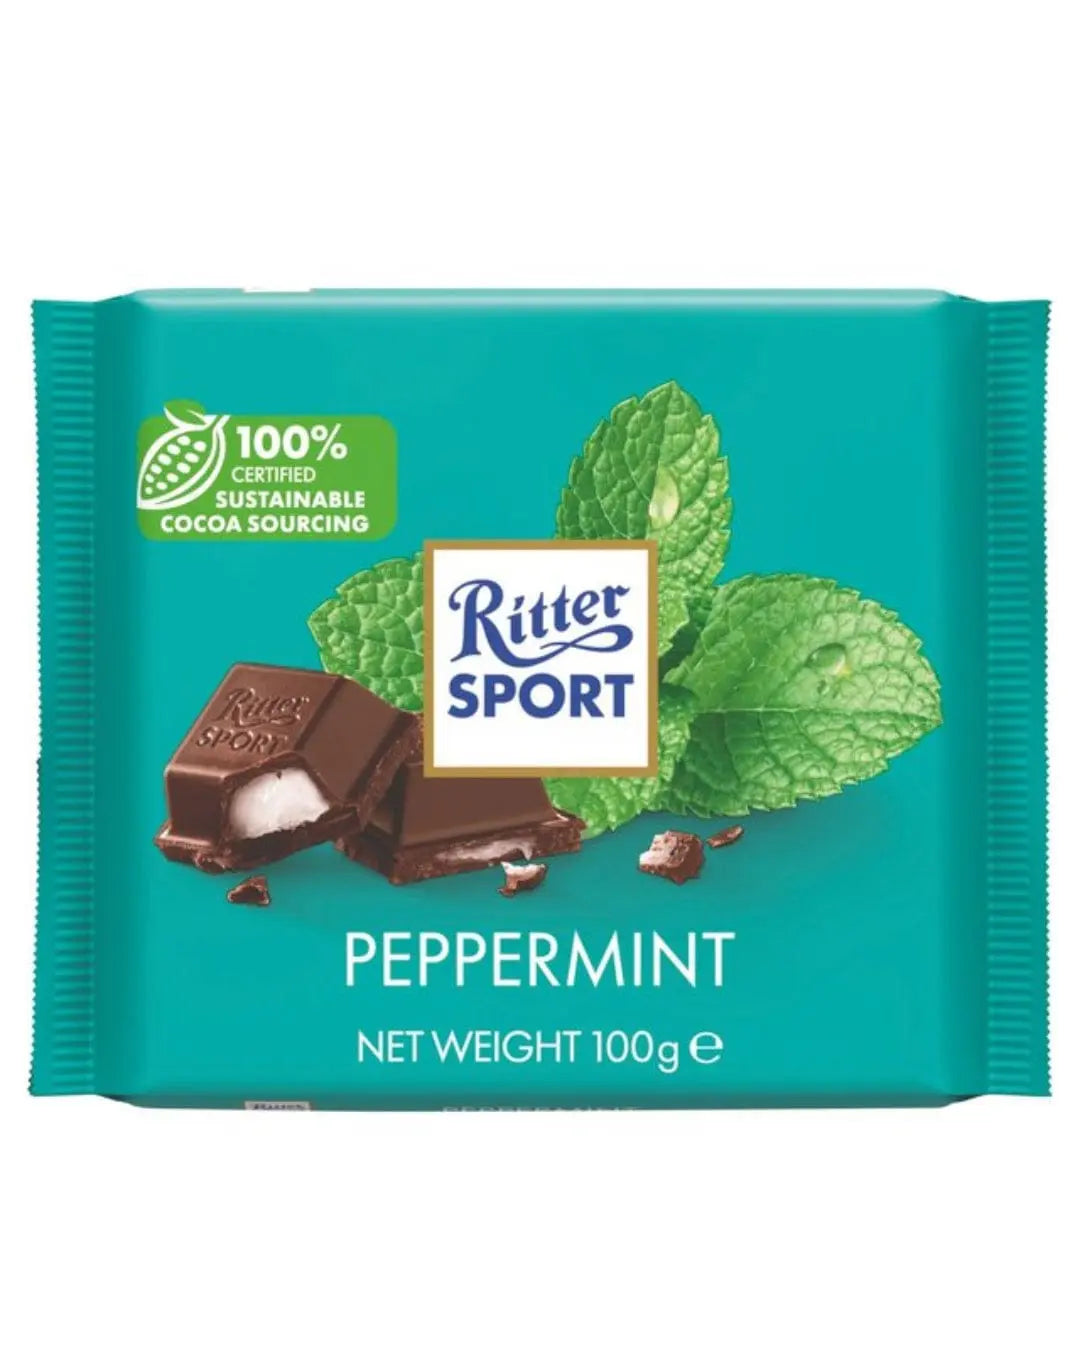 Ritter Sport Dark Choc With Peppermint, 5 x 100 g Chocolate